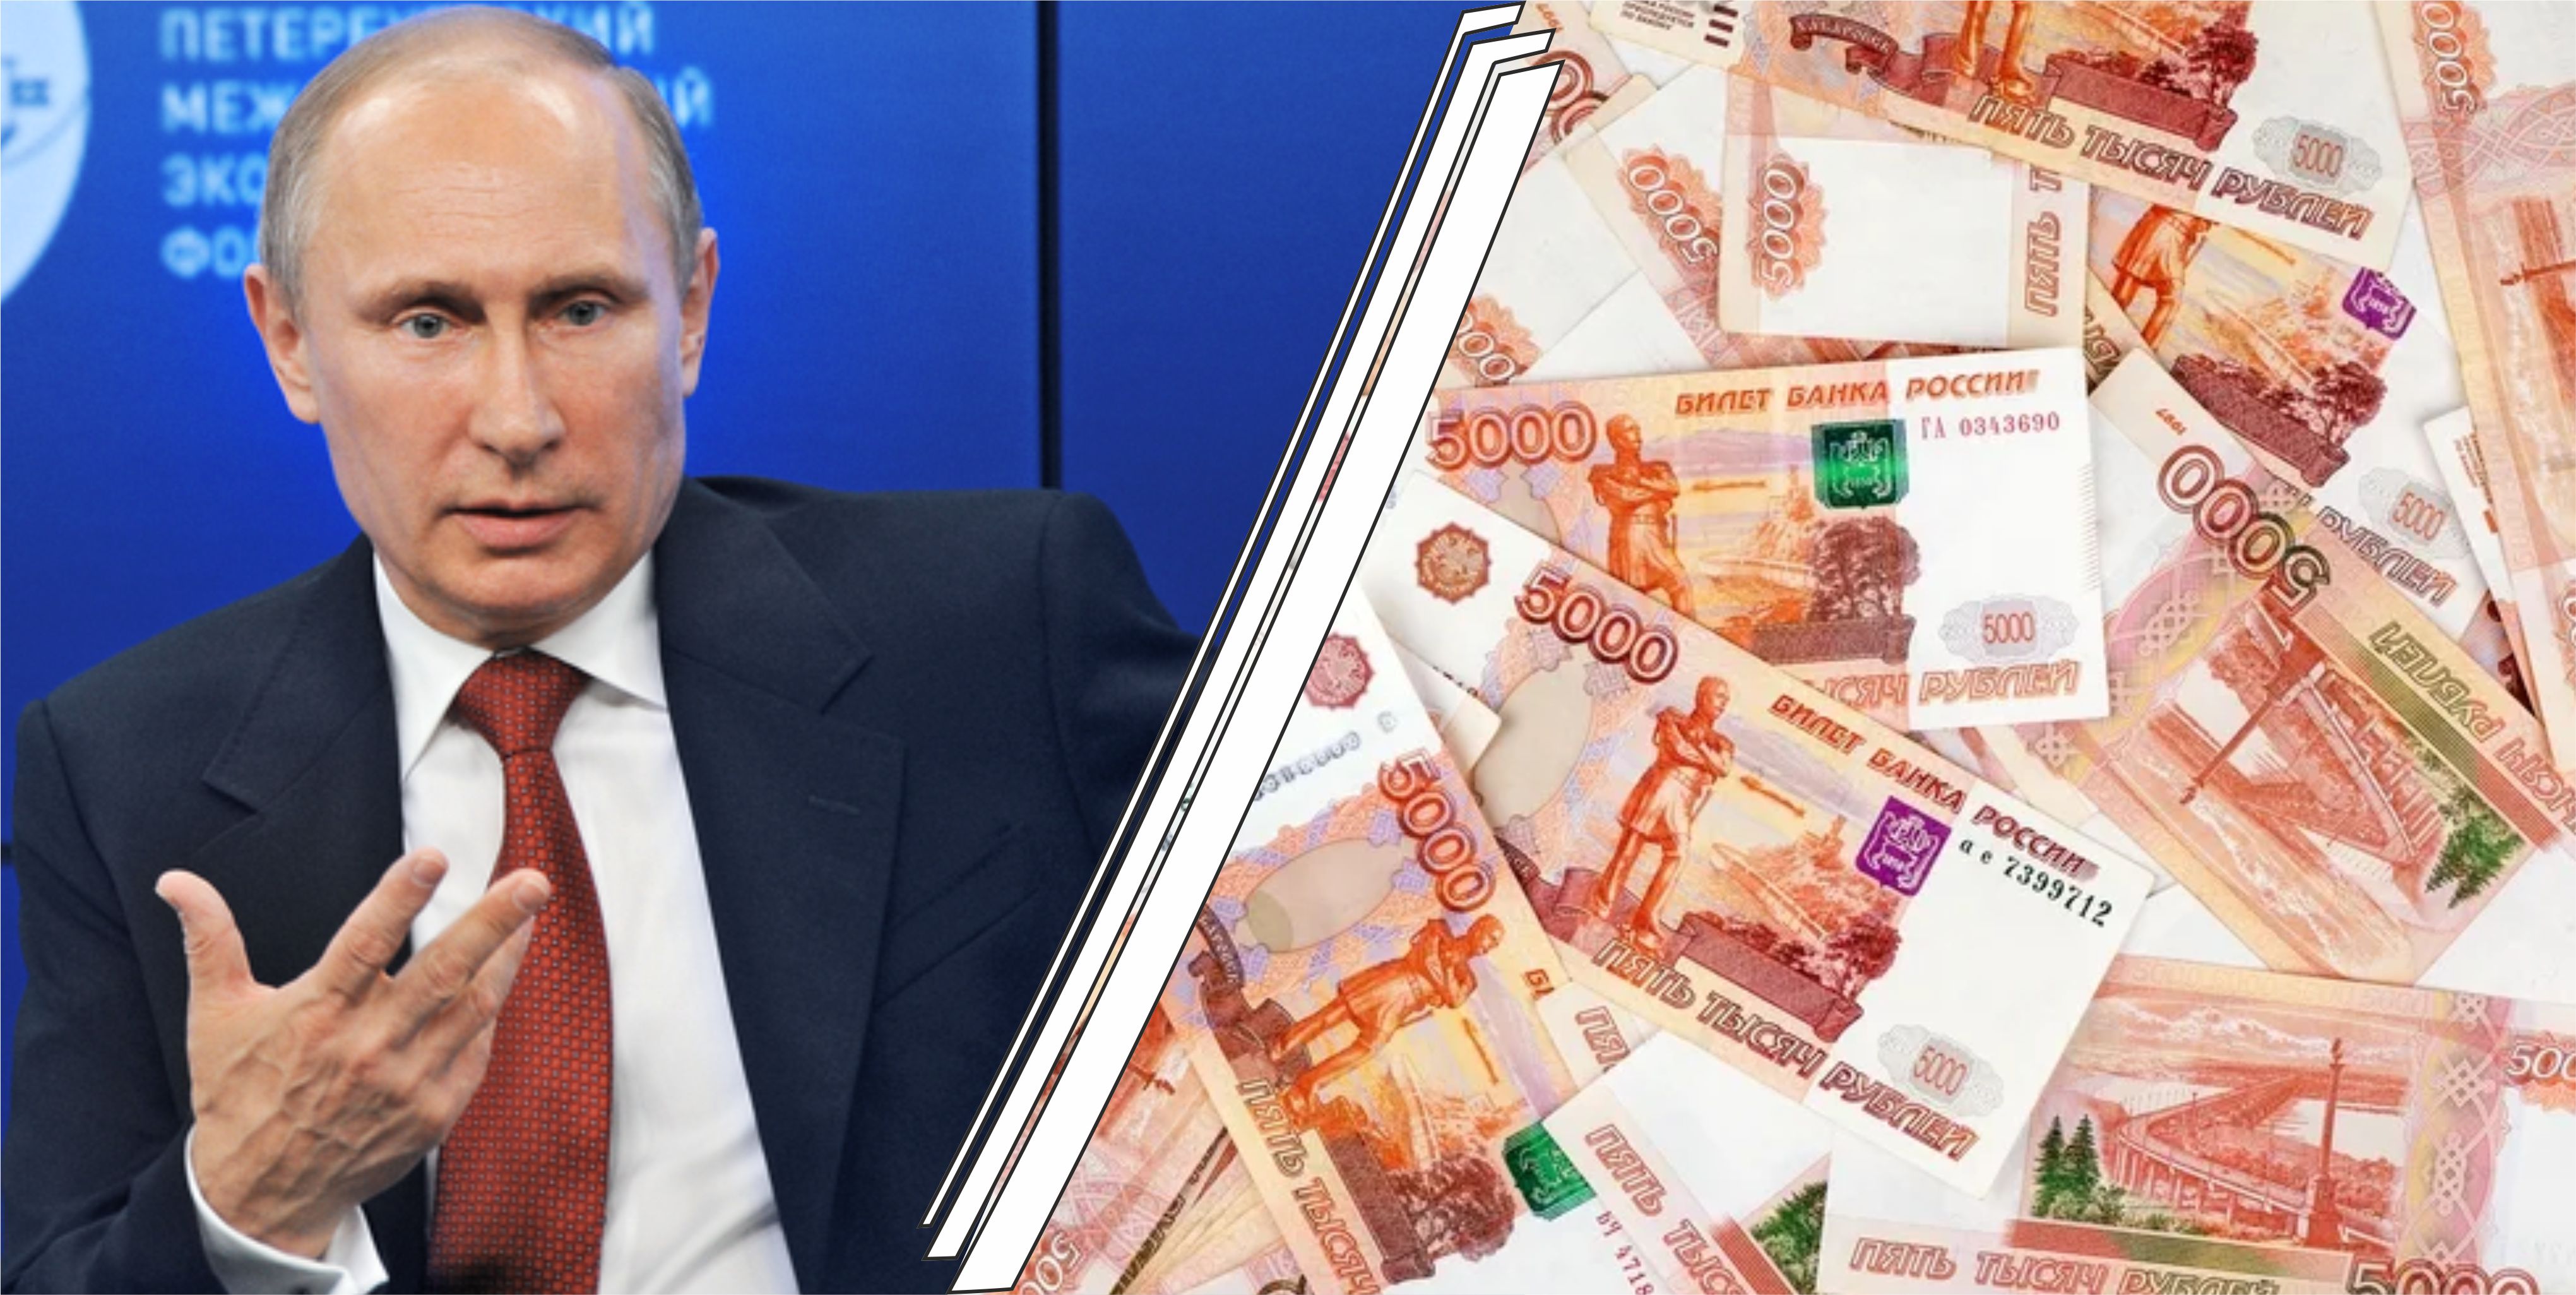 Путин сколько зарабатывает: официальная зарплата у президента